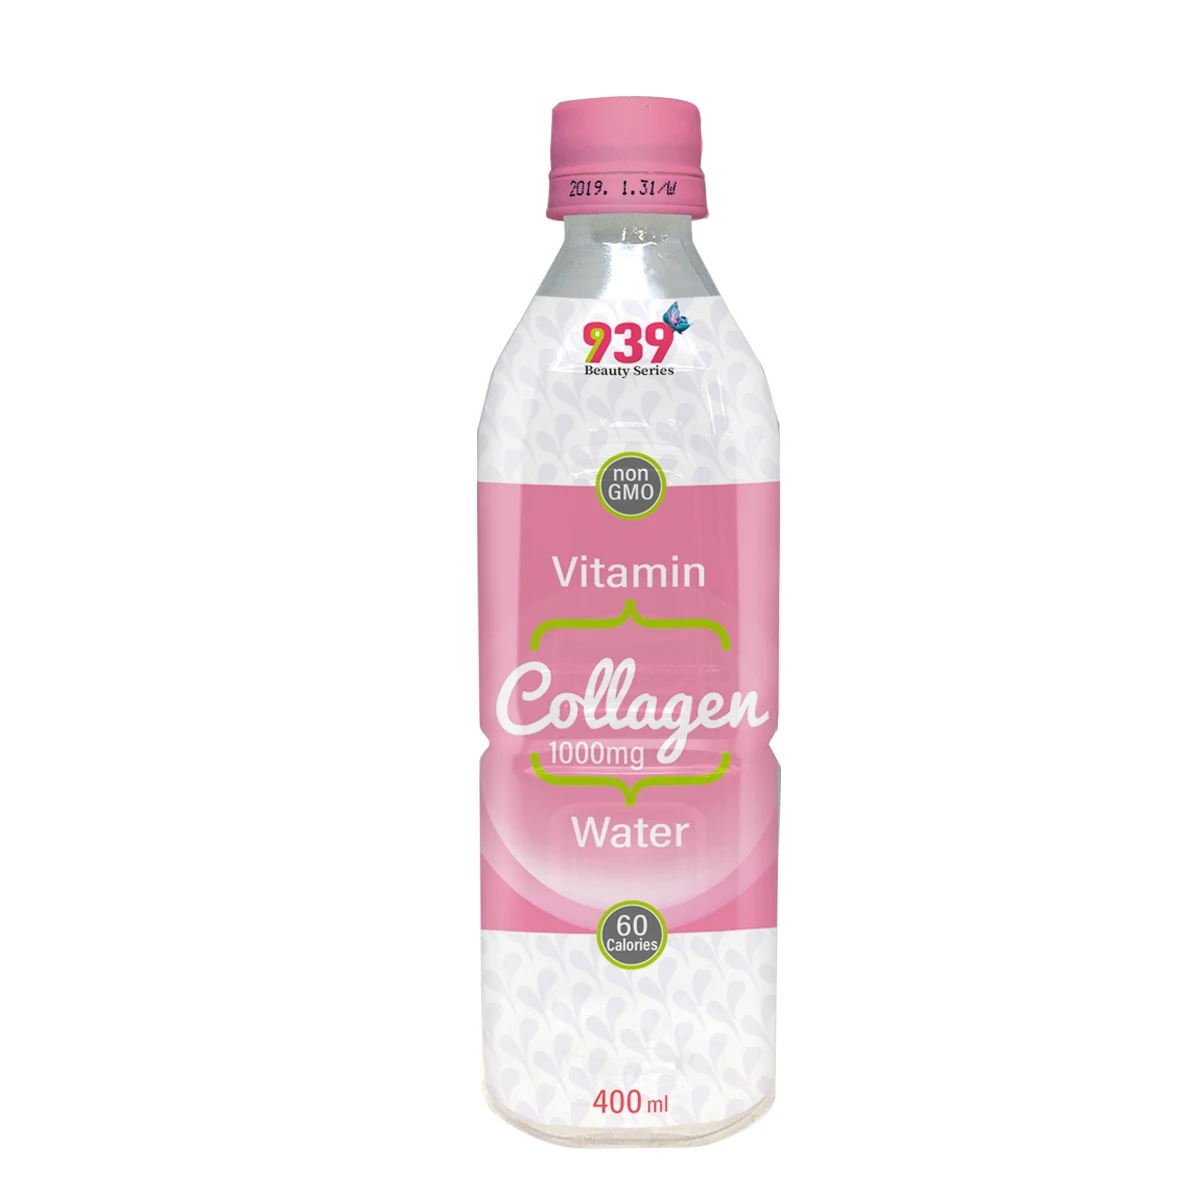 
Collagen Water Beverage Product Development  (10000001388262)